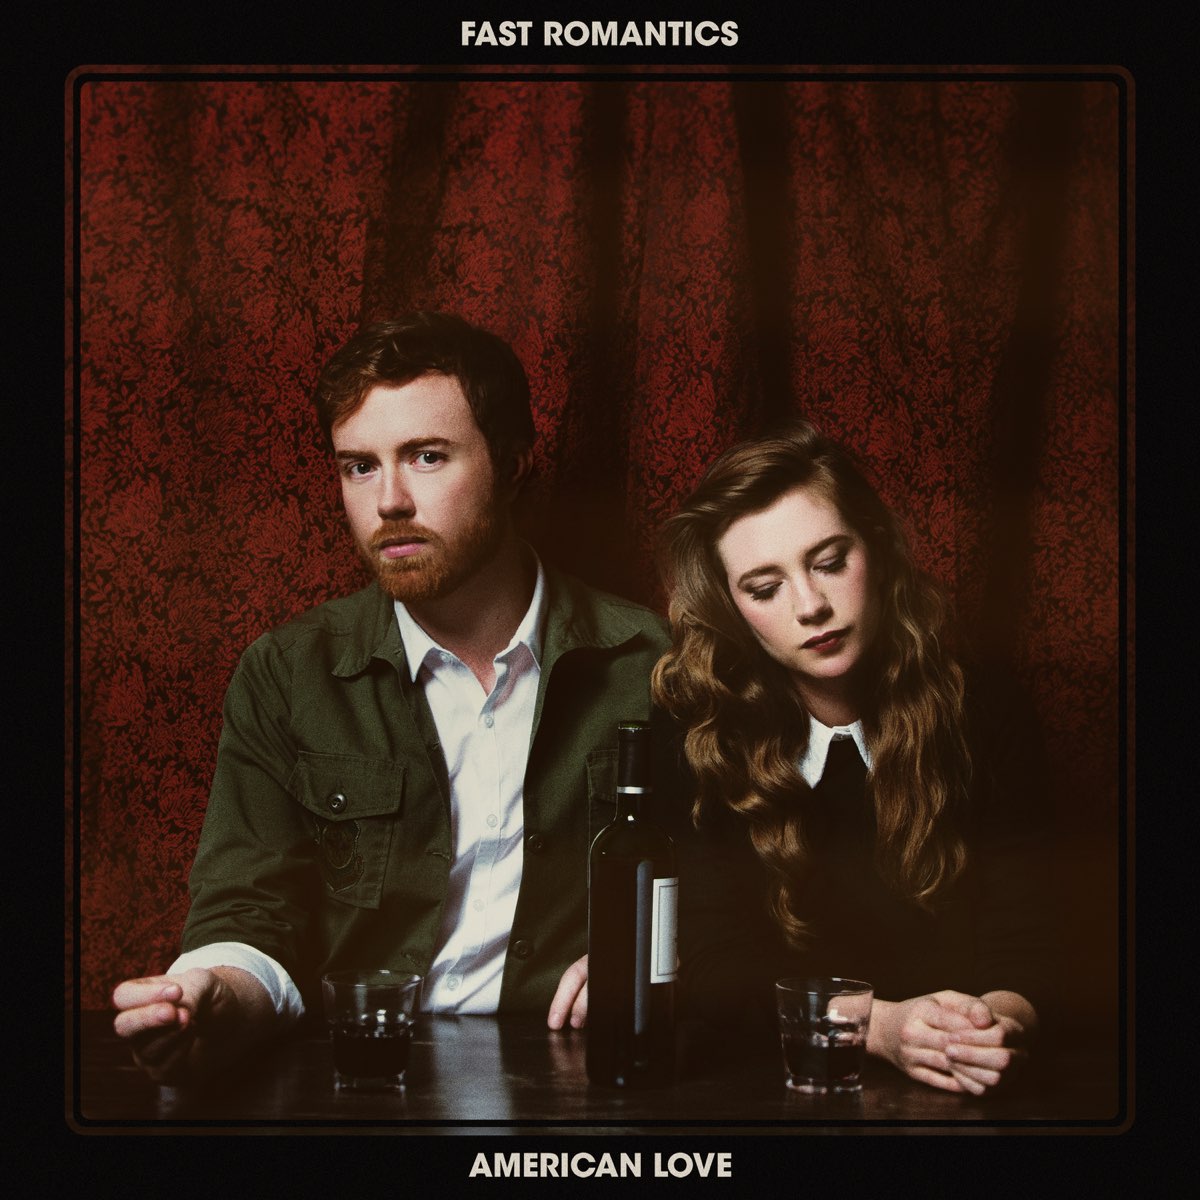 American Romantic. American Romantics Romance. America Love movie. Manufactured Romance.